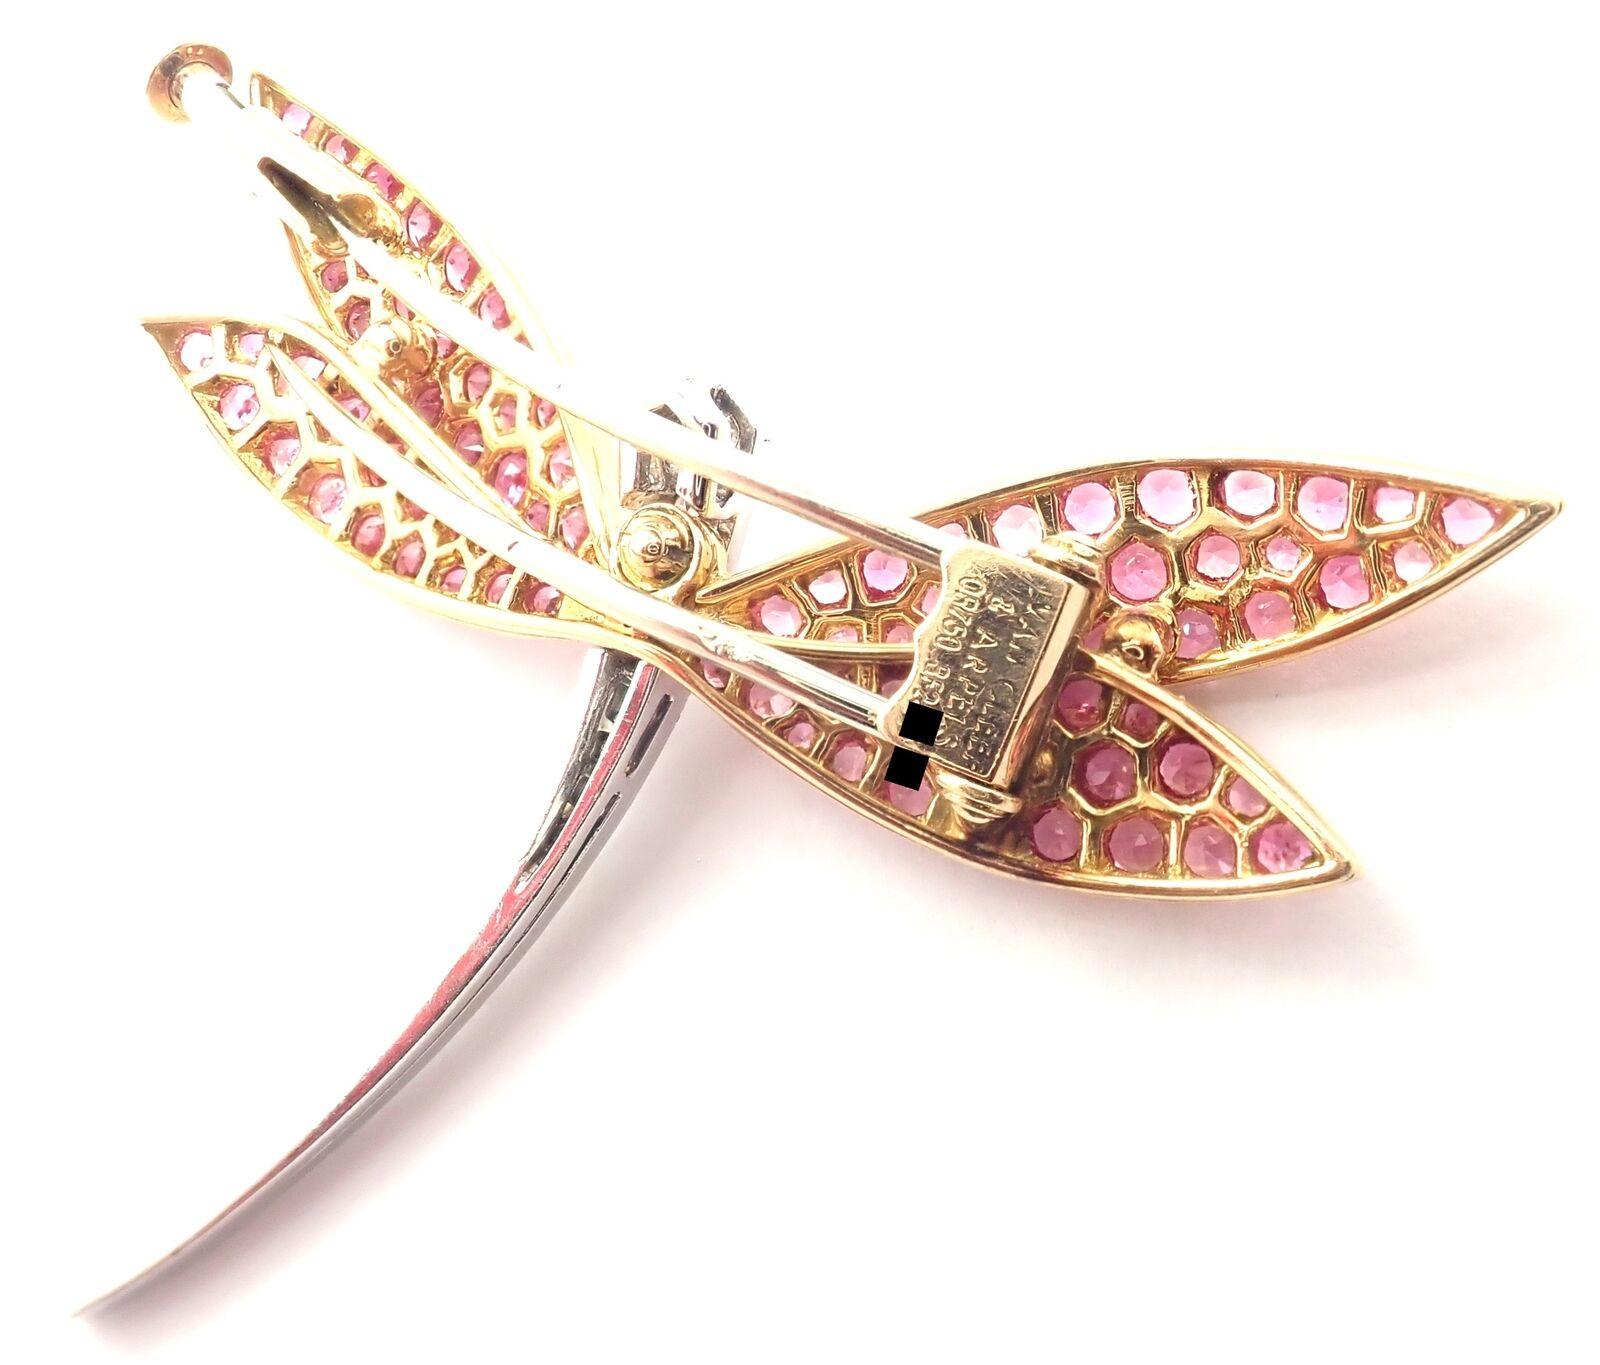 Brilliant Cut Van Cleef & Arpels Dragonfly Diamond Pink Sapphire White Gold Pin Brooch